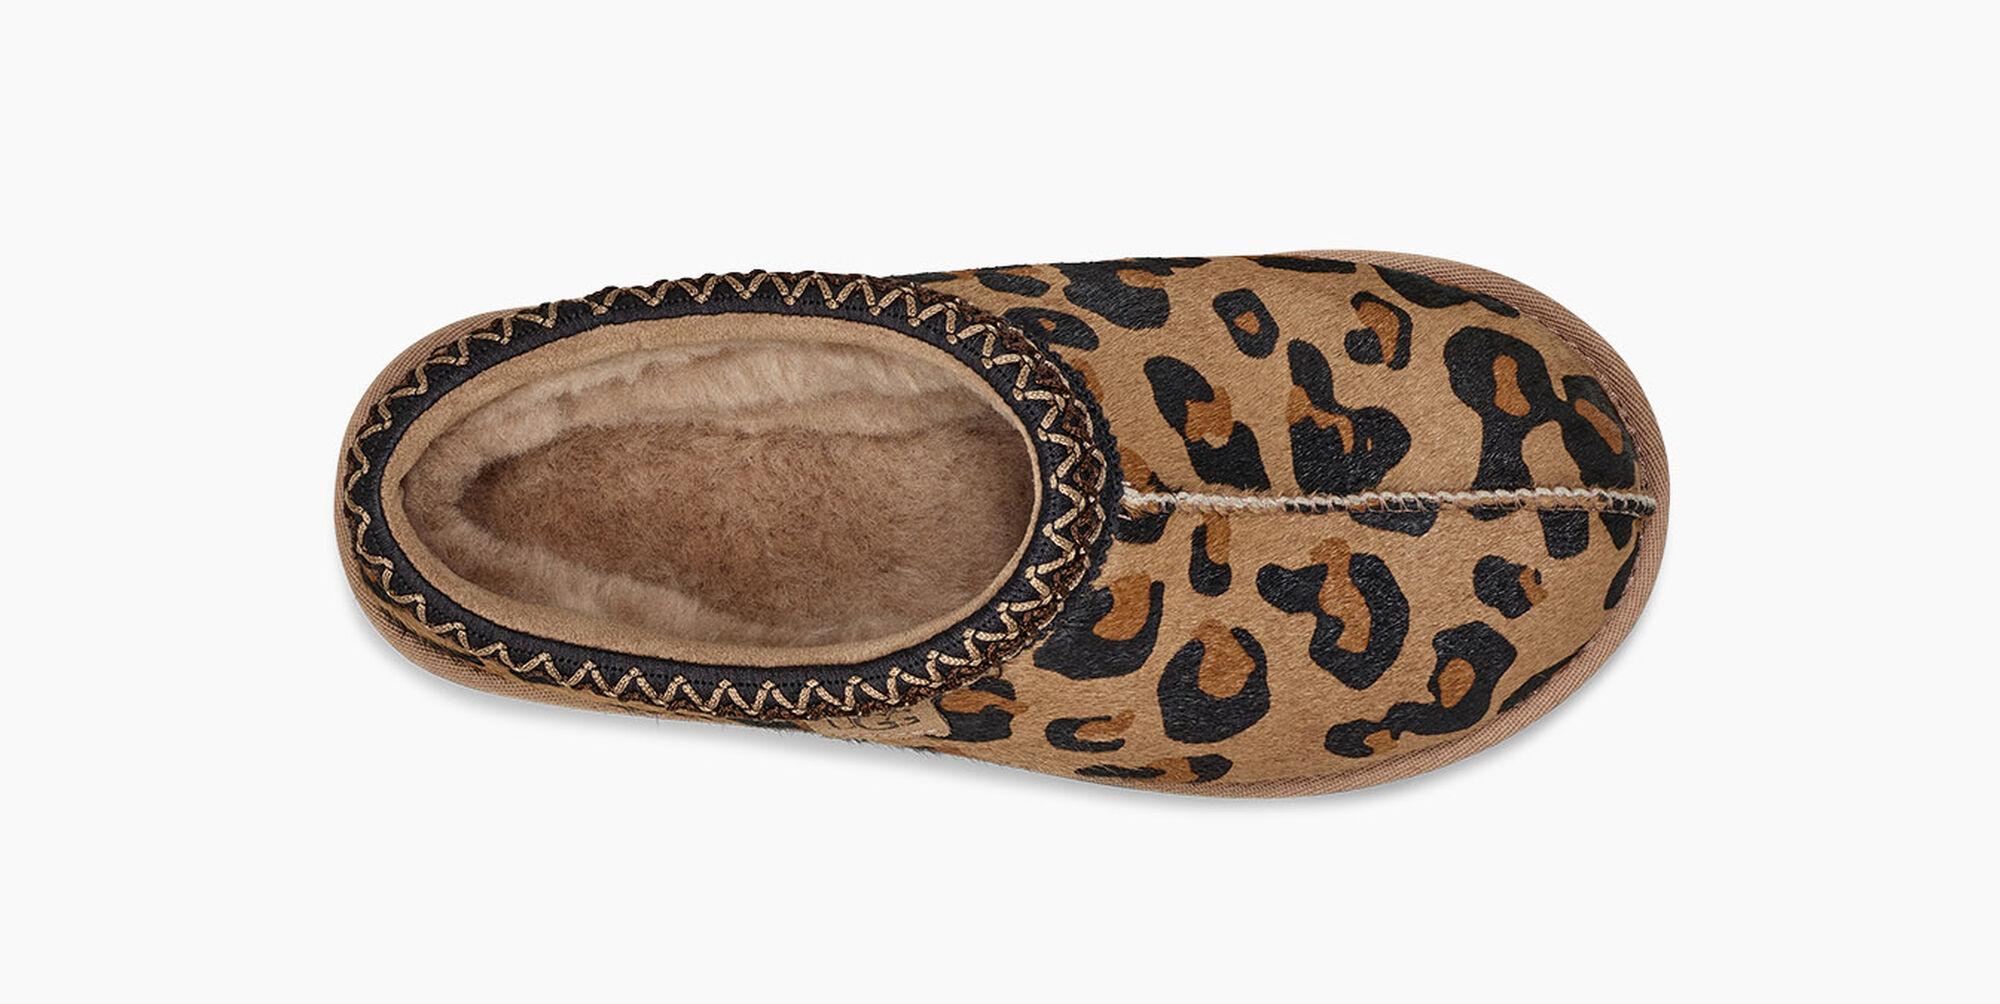 tasman leopard ugg slippers